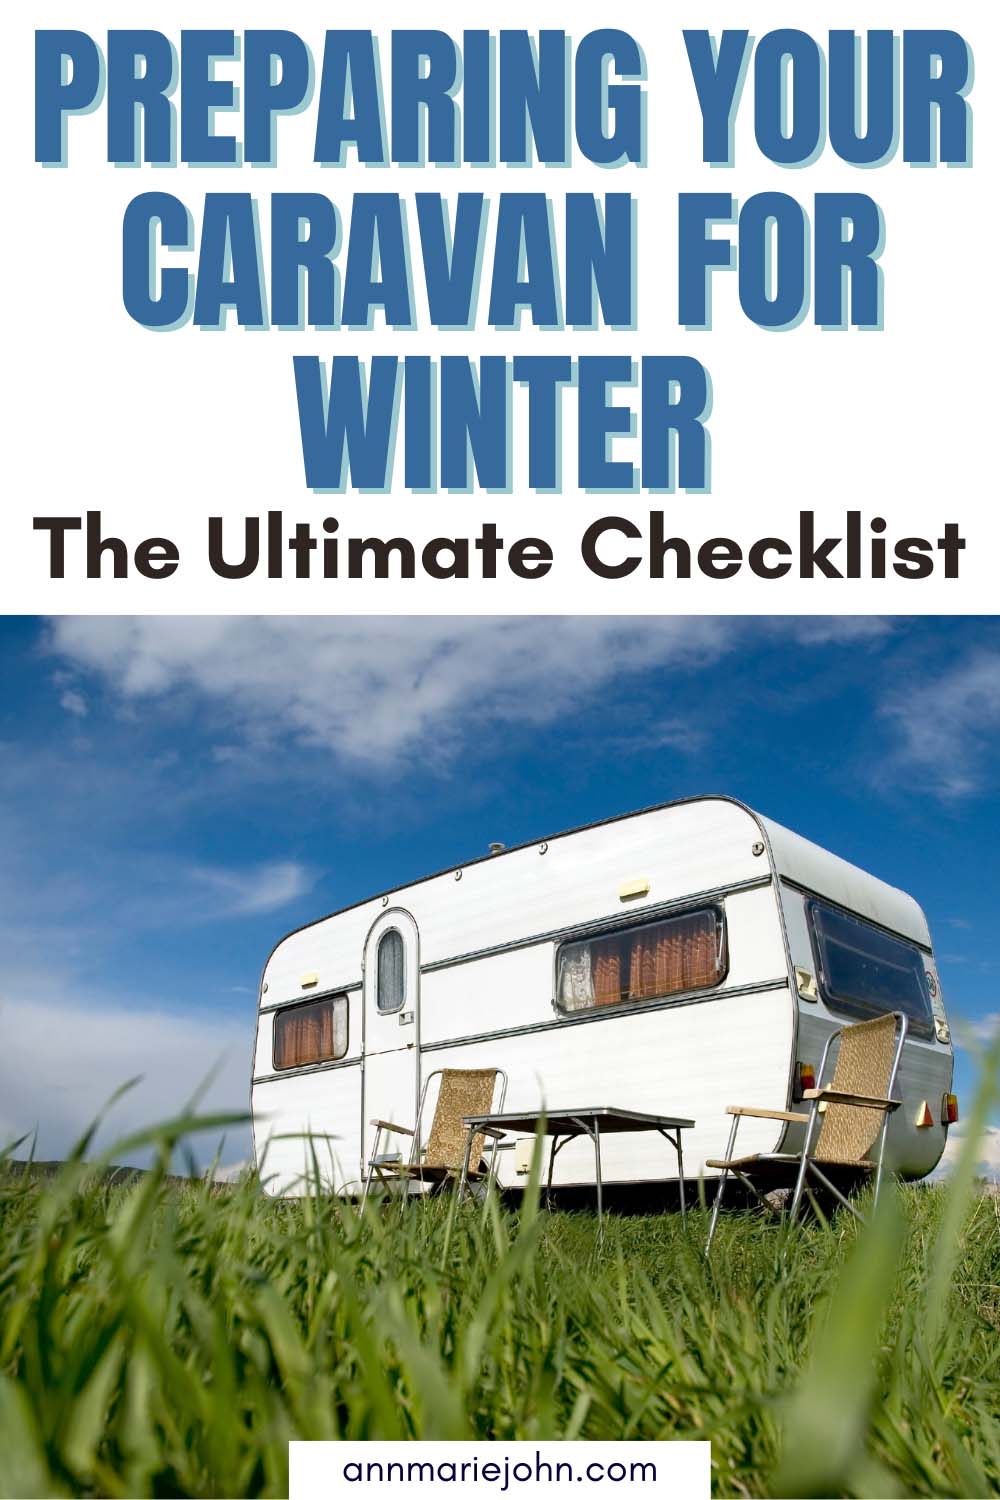 Preparing Your Caravan for Winter: The Ultimate Checklist